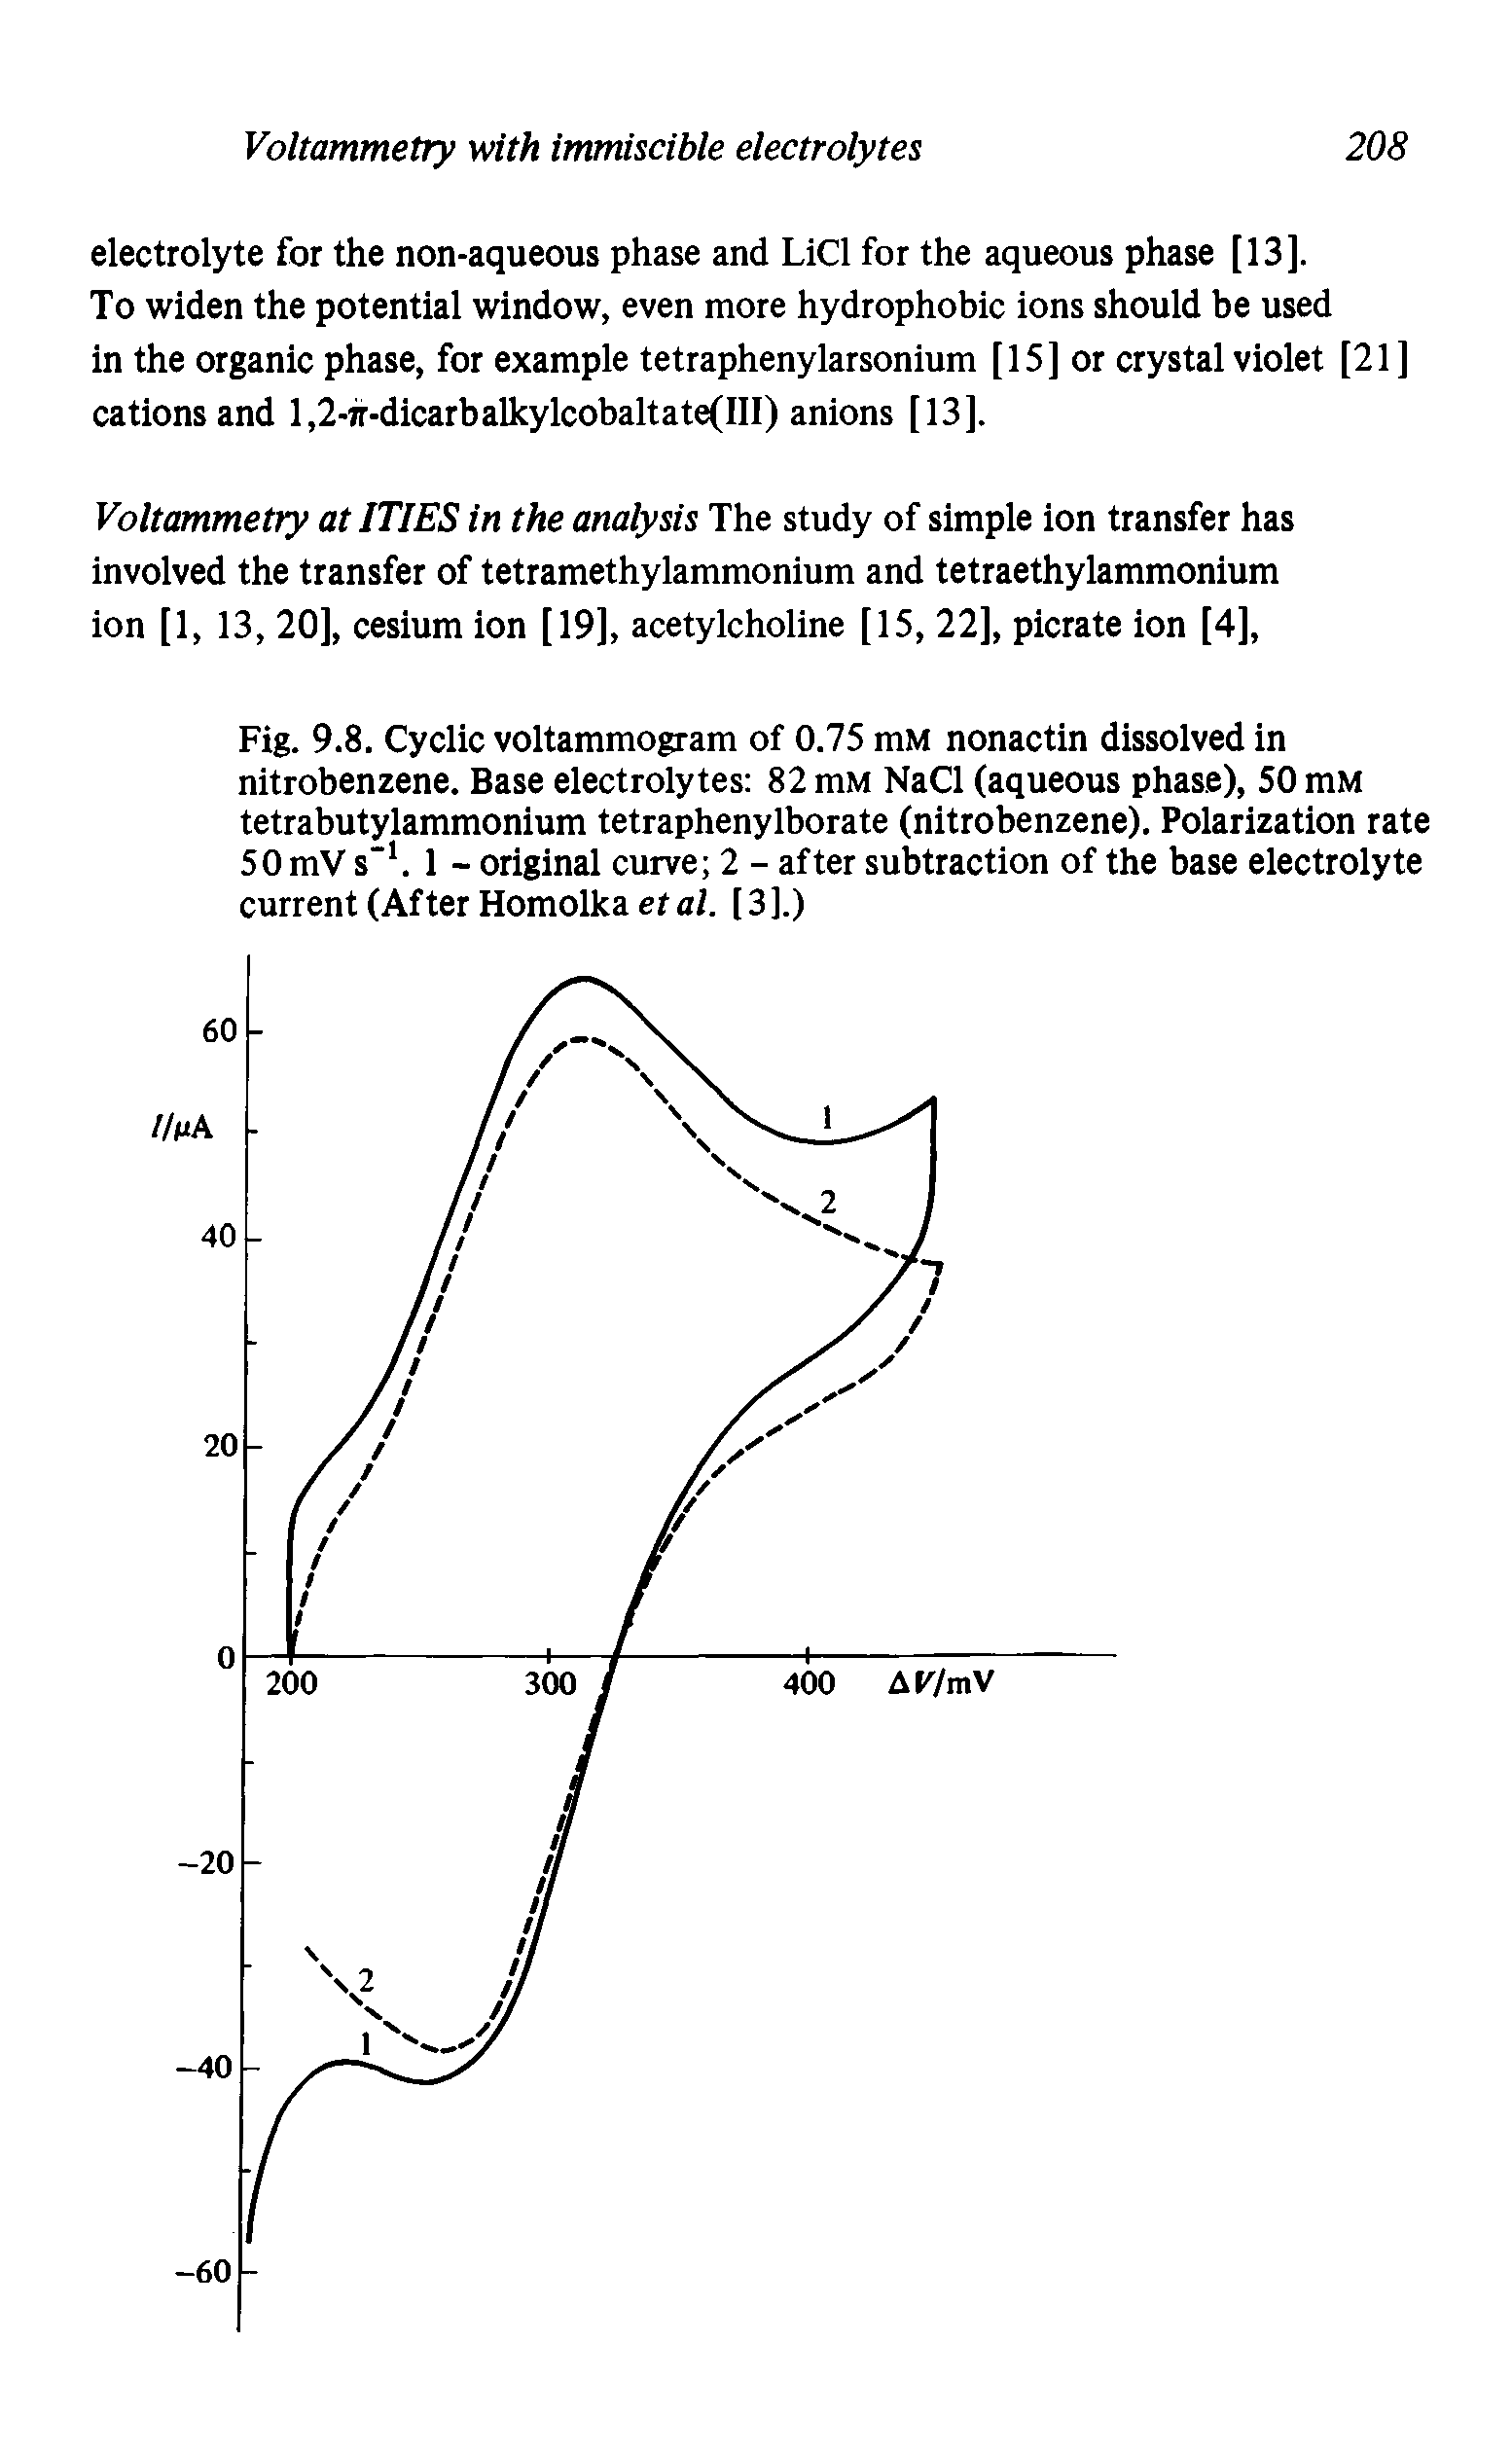 Fig. 9.8. Cyclic voltammogram of 0.75 mM nonactin dissolved in nitrobenzene. Base electrolytes 82 mM NaCl (aqueous phase), 50 mM tetrabutylammonium tetraphenylborate (nitrobenzene). Polarization rate 50 mV s" . 1 - original curve 2 - after subtraction of the base electrolyte current (After Homolka et al. [ 3 ].)...